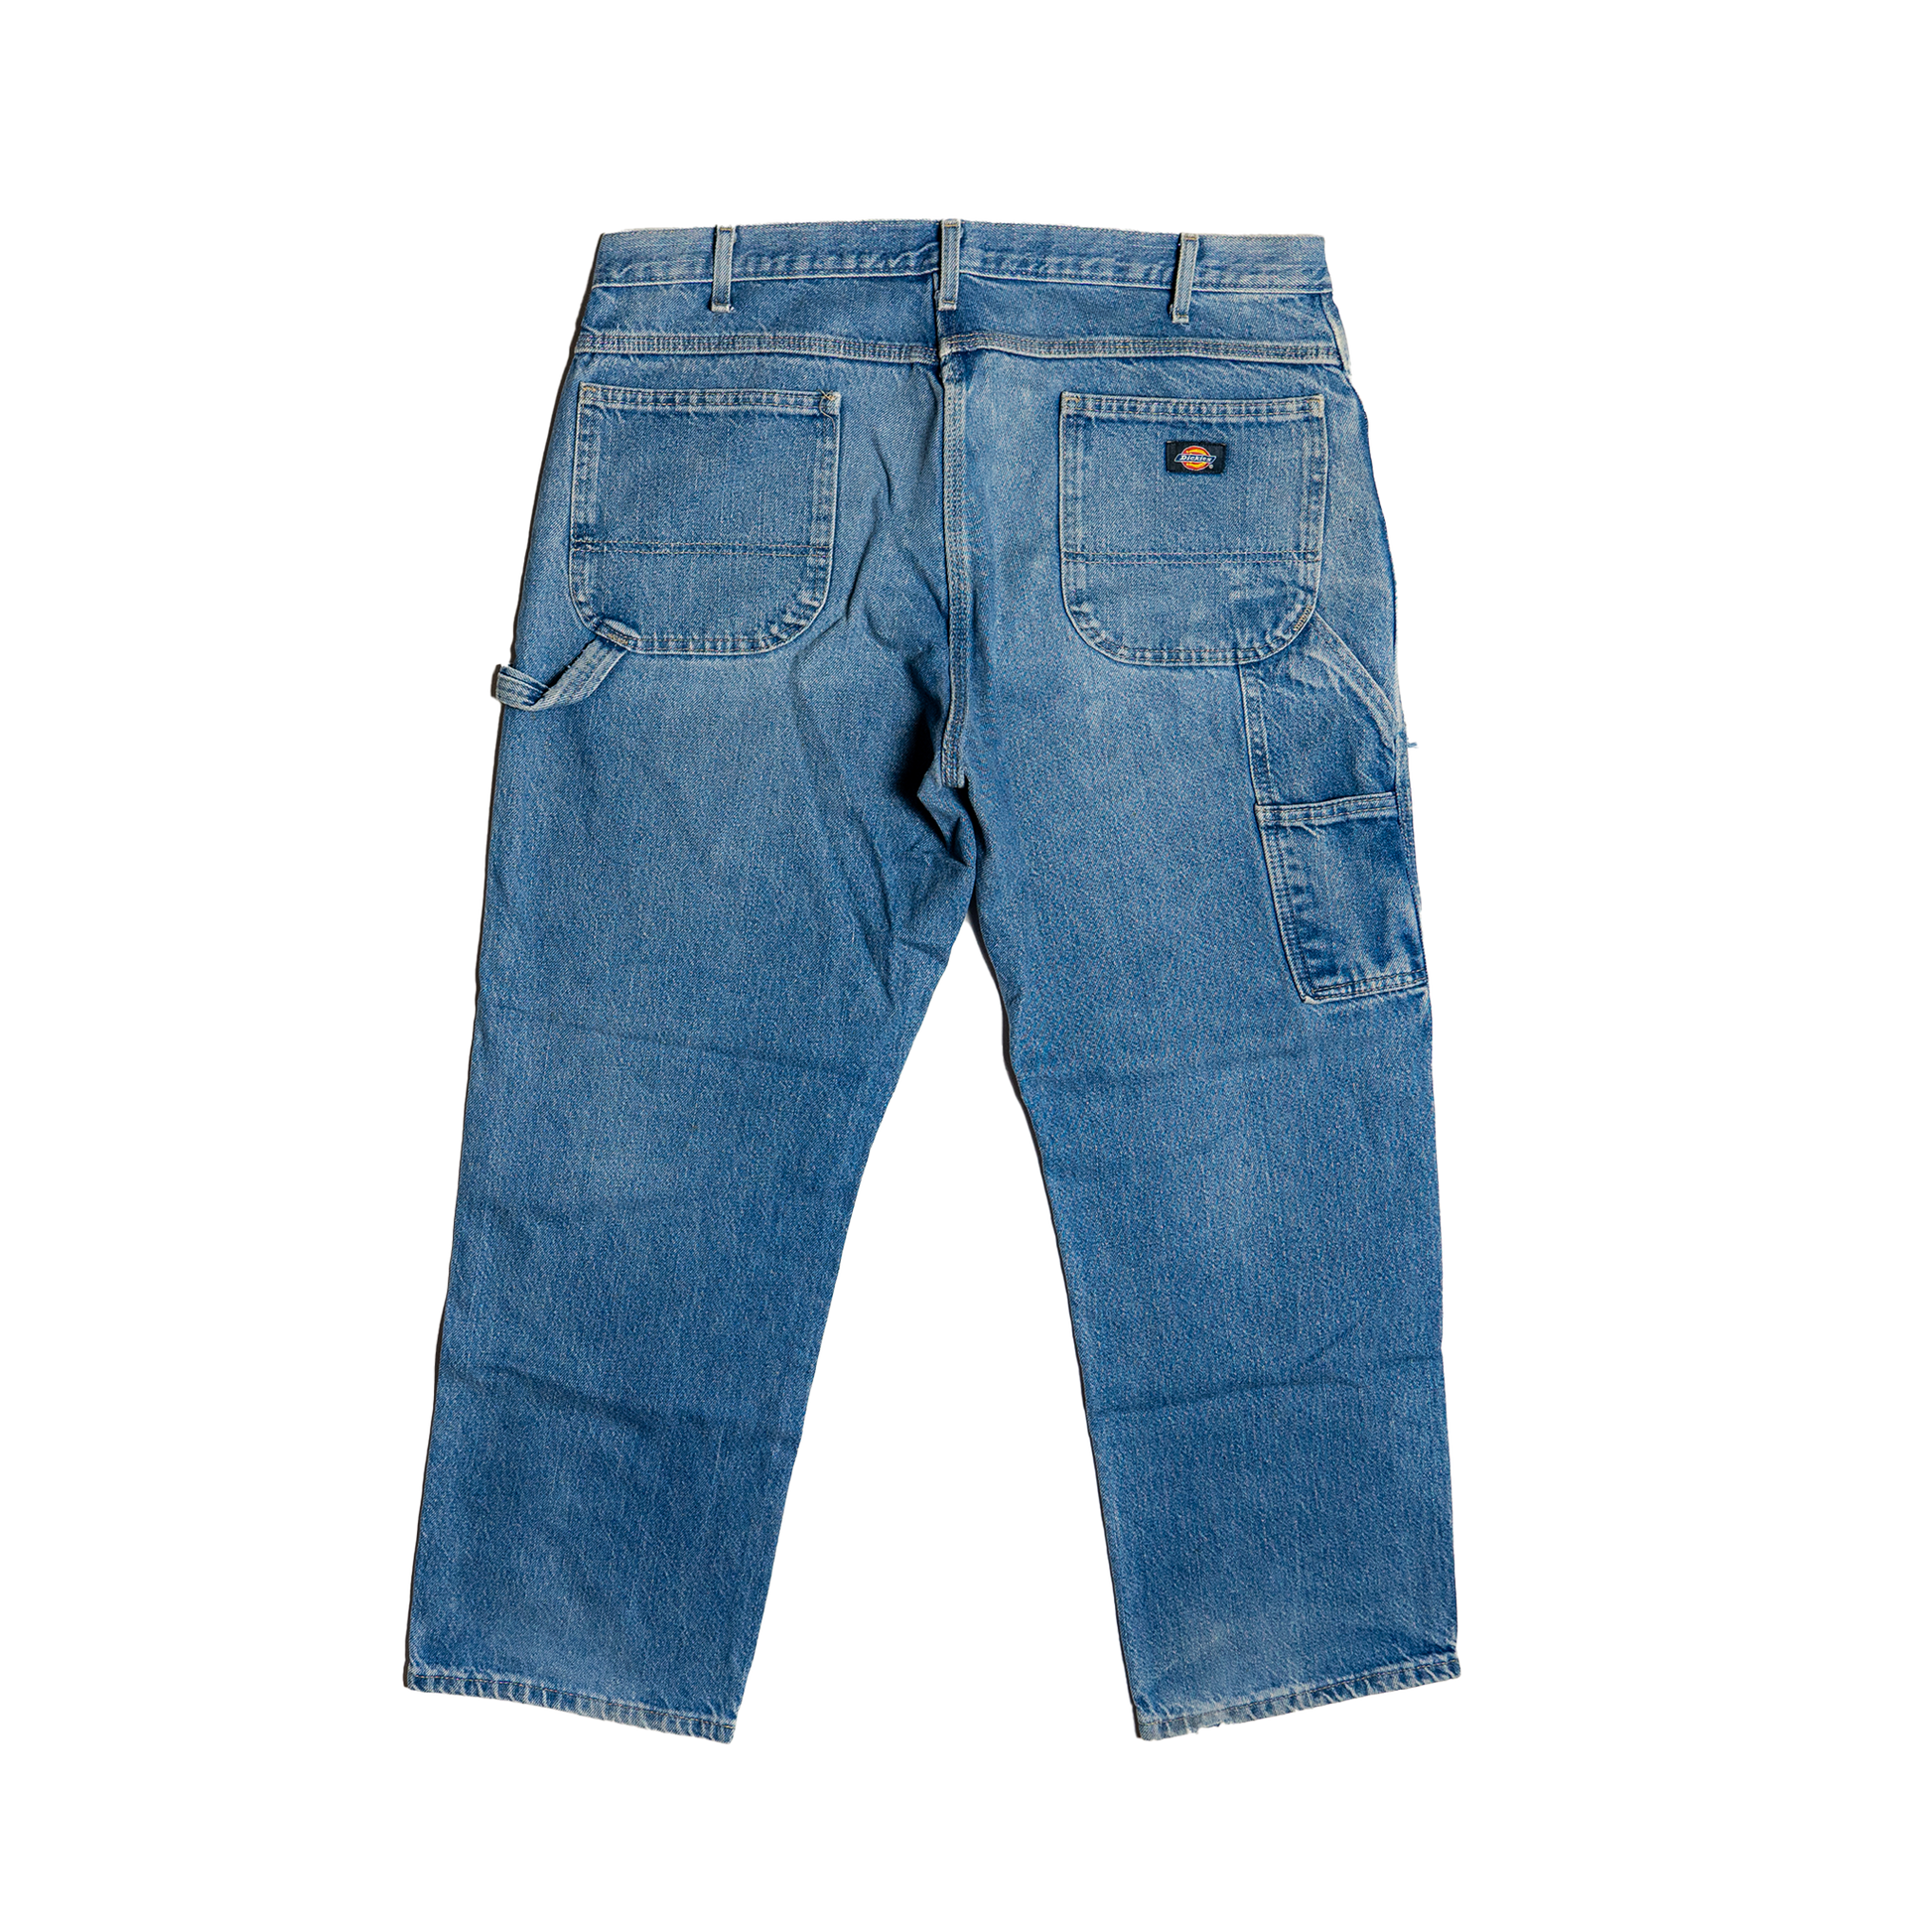 Dickies Blue Carpenter Jeans - Back